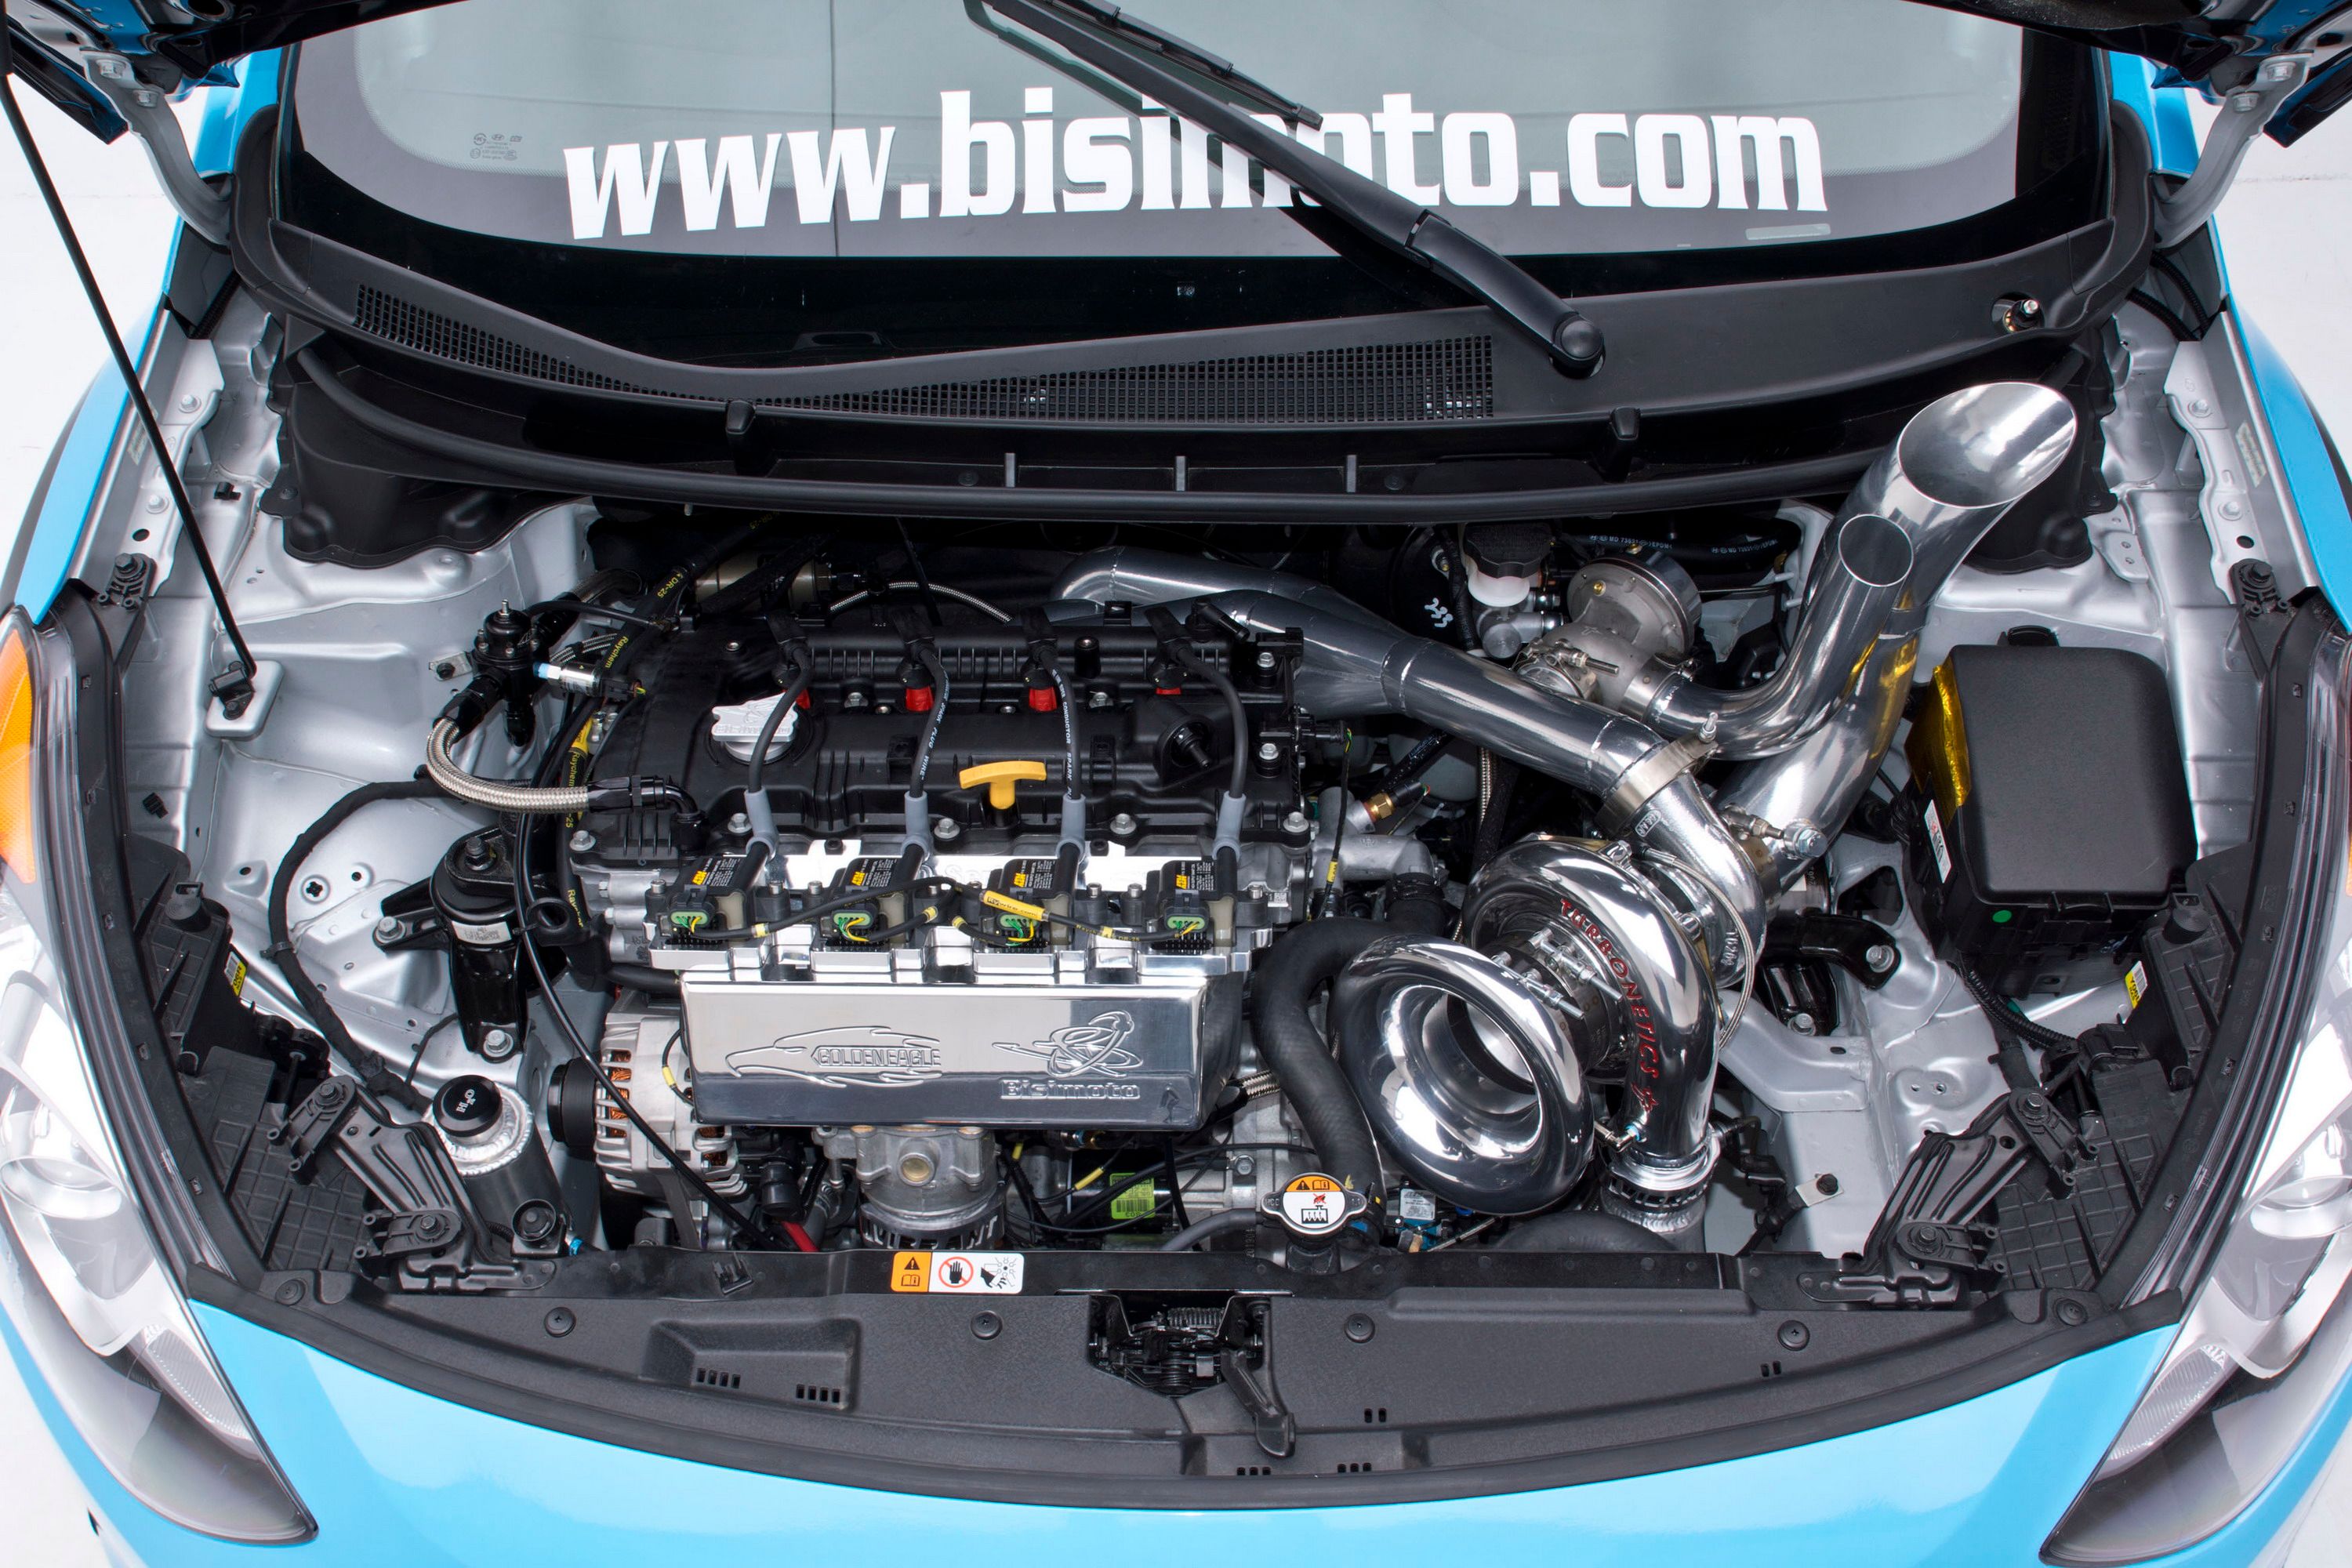 2012 Hyundai Elantra GT Concept by Bisimoto Engineering